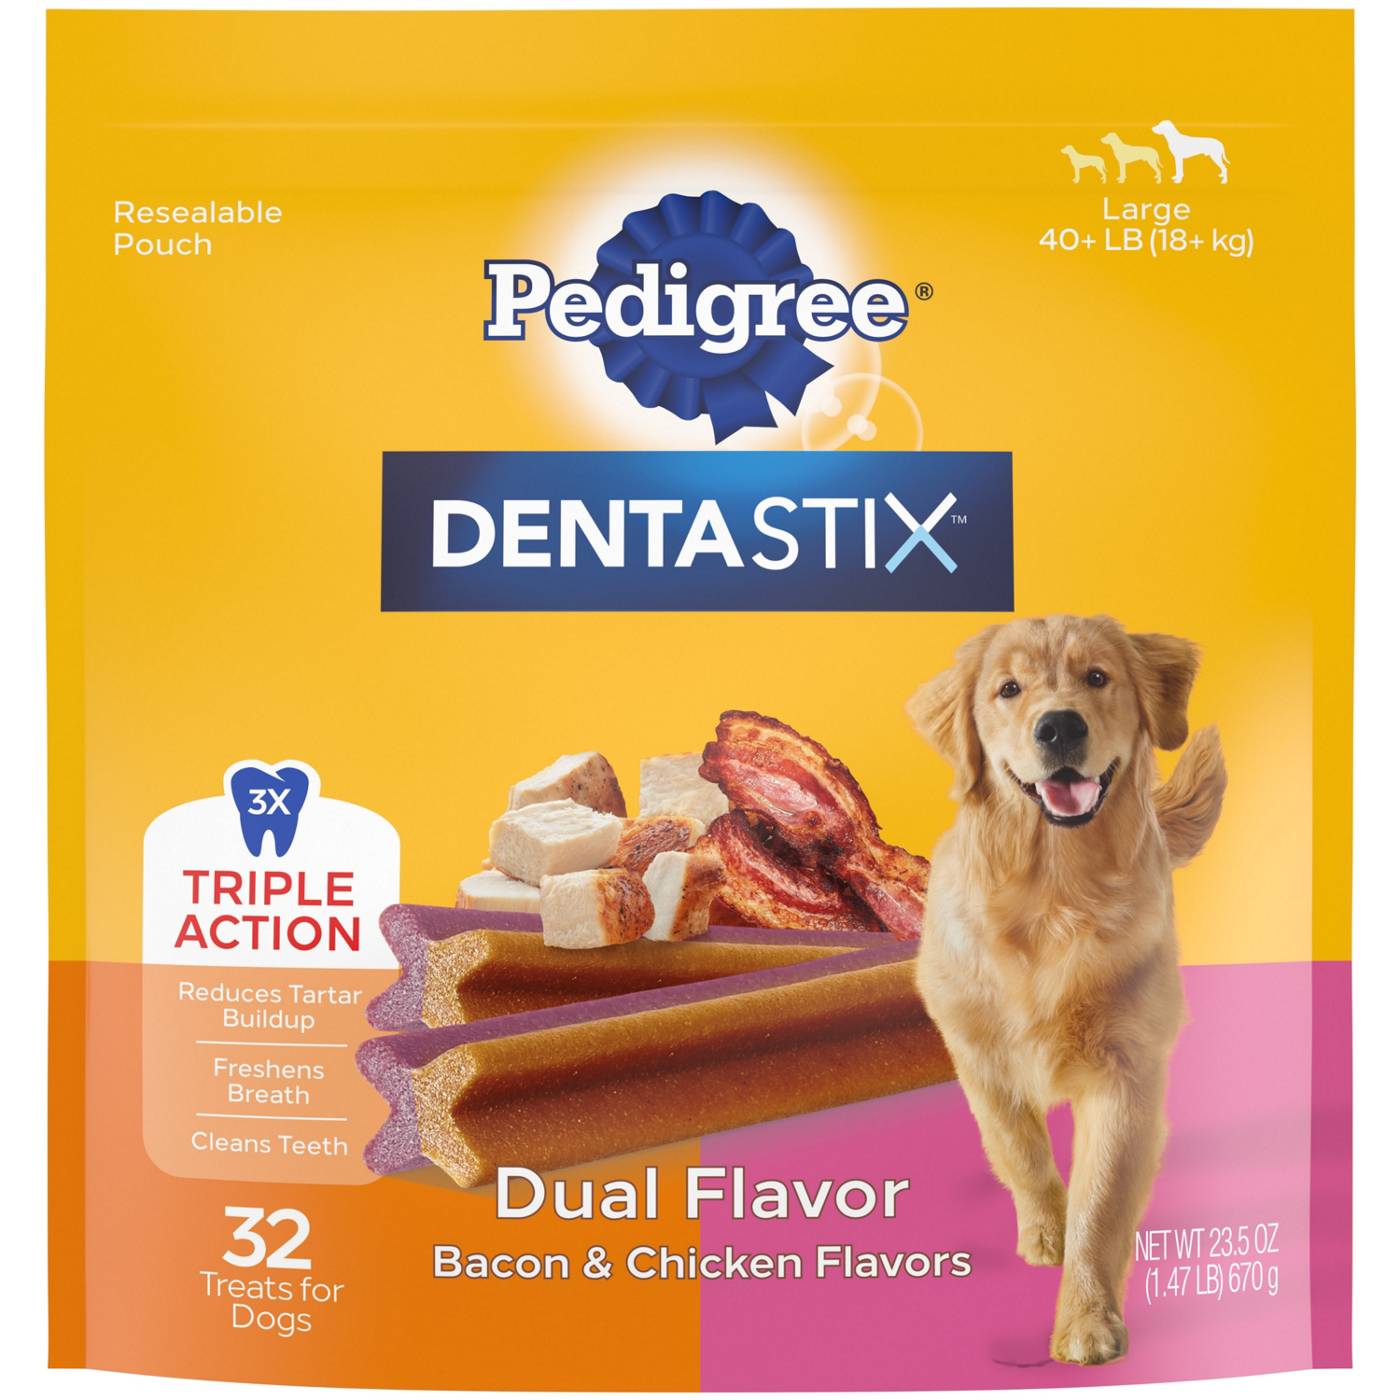 Pedigree Dentastix Dual Flavor Bacon & Chicken Dog Treats; image 1 of 5